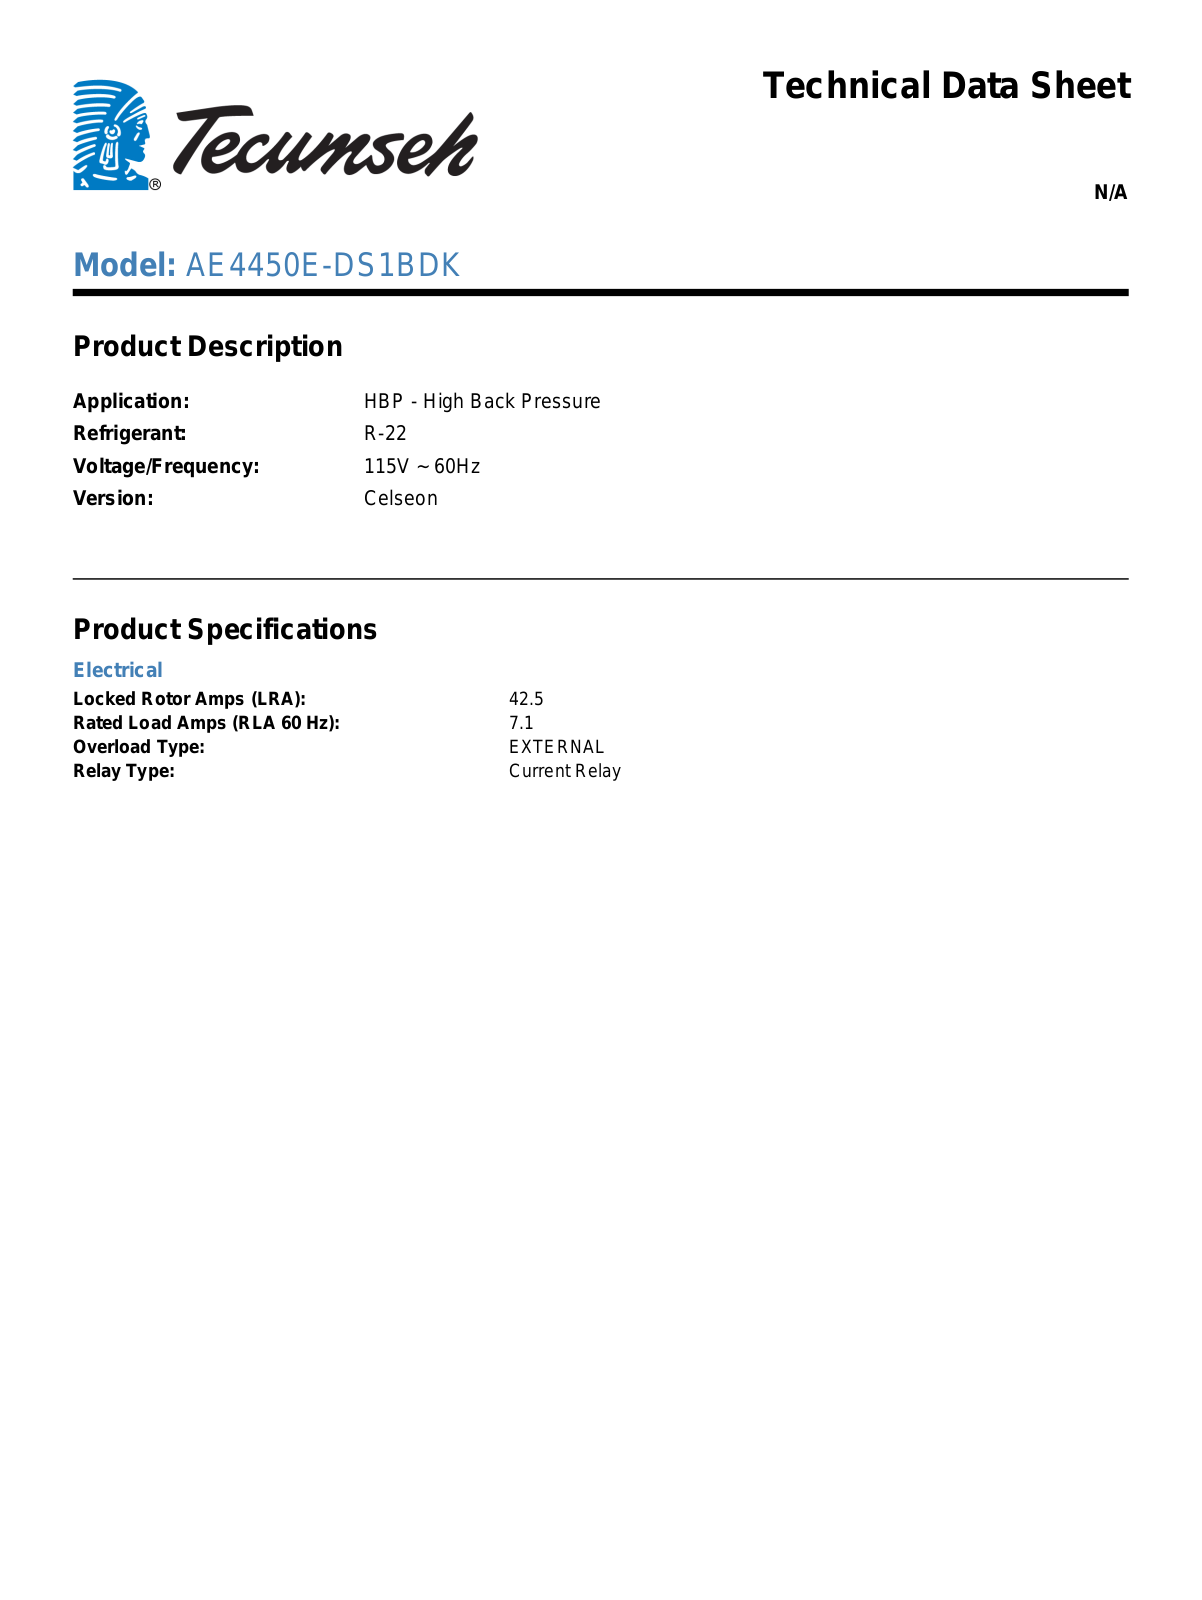 Tecumseh AE4450E-DS1BDK User Manual